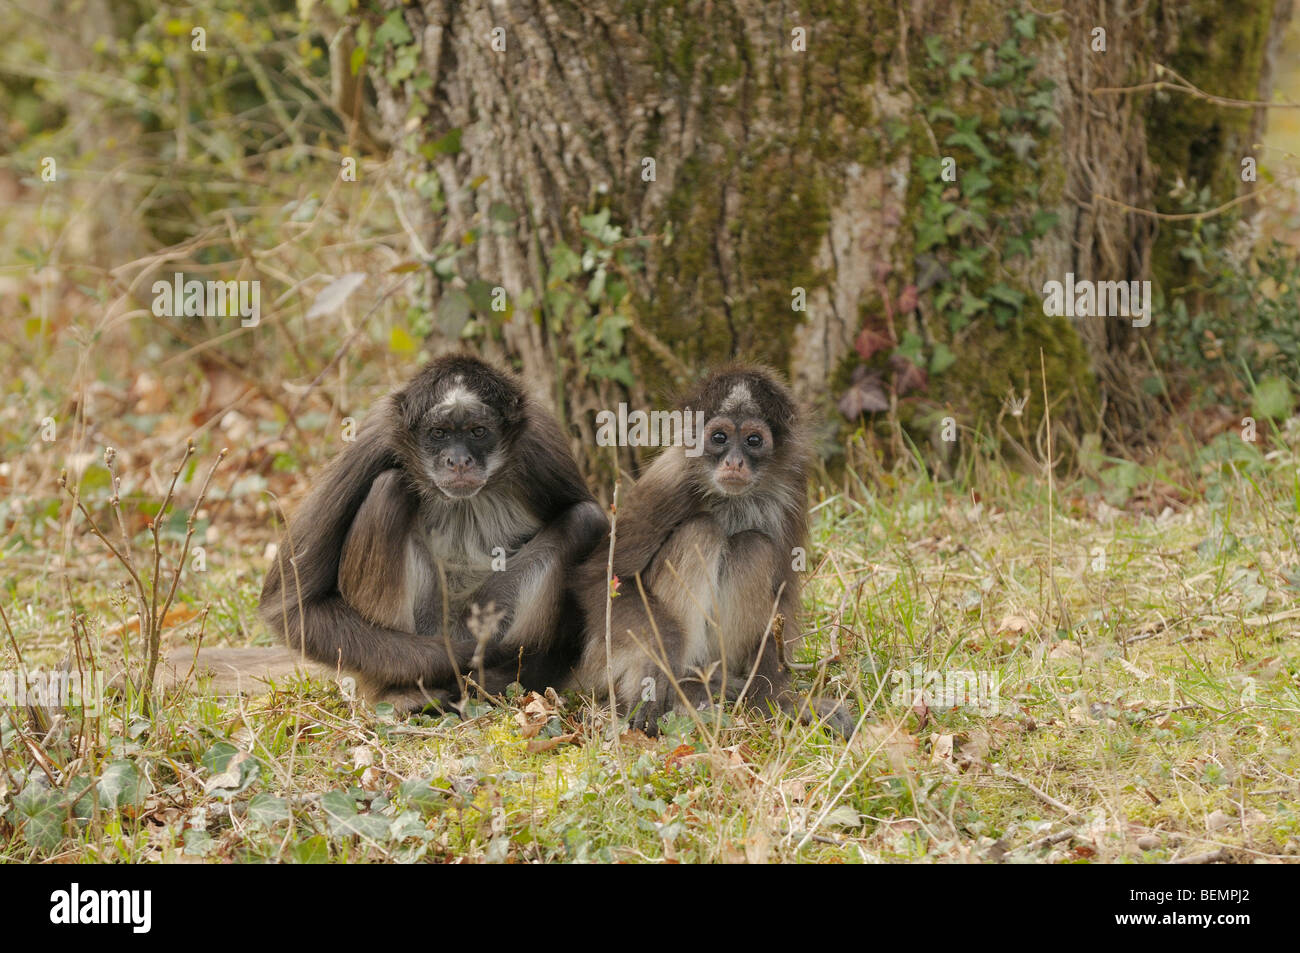 Bianco-panciuto scimmia ragno Ateles belzebuth femmina e baby captive Foto Stock